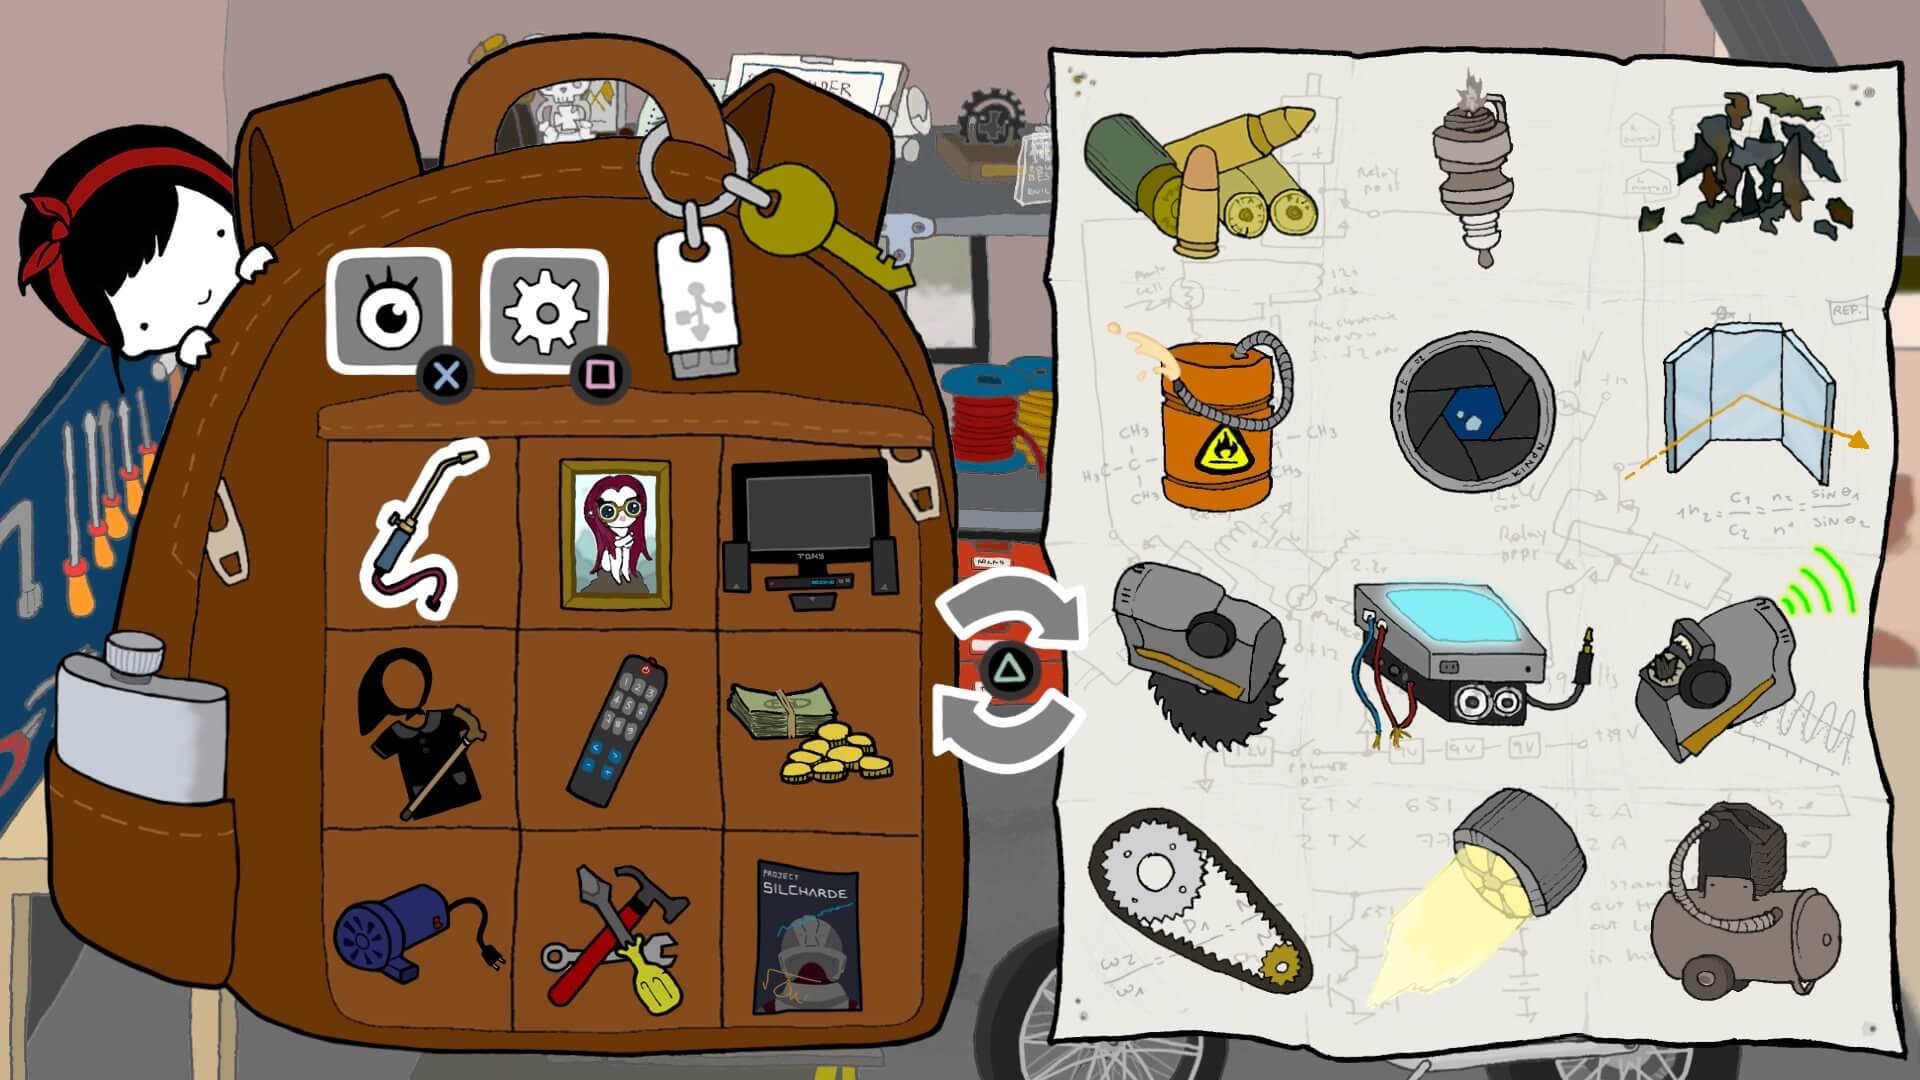 Nika's inventory screen